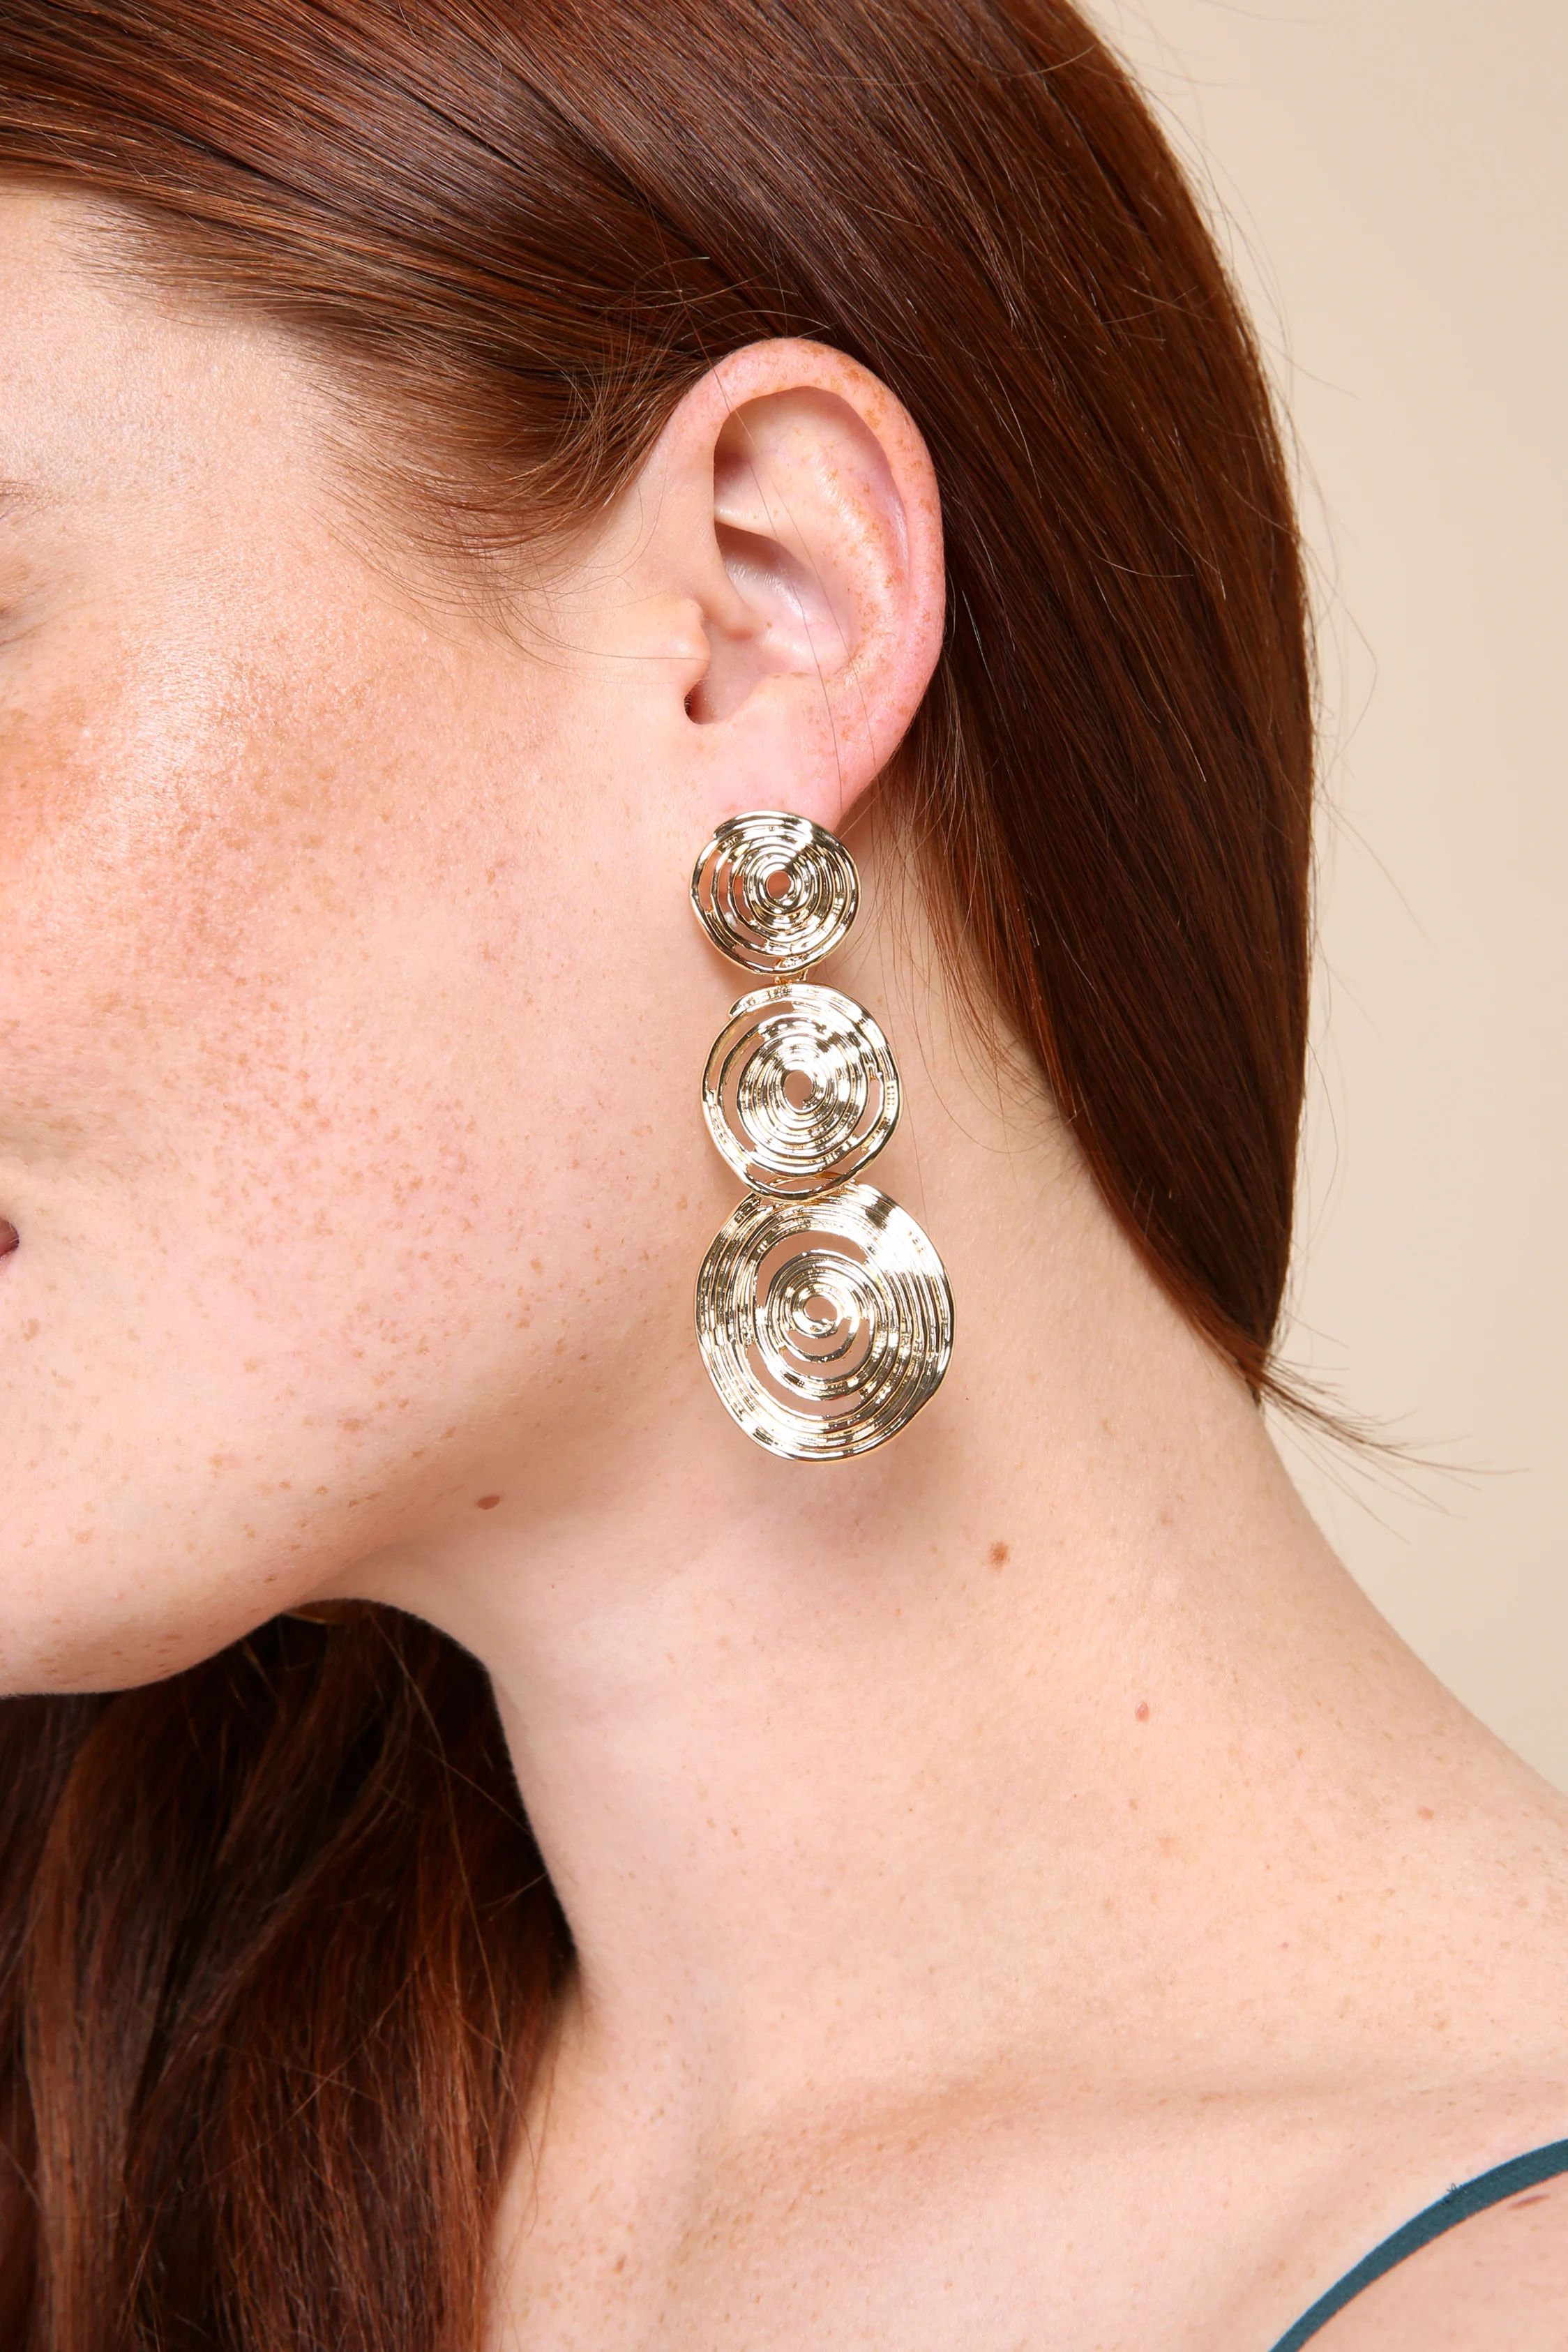 Stunning Gleam Gold Spiral Drop Statement Earrings | Lulus